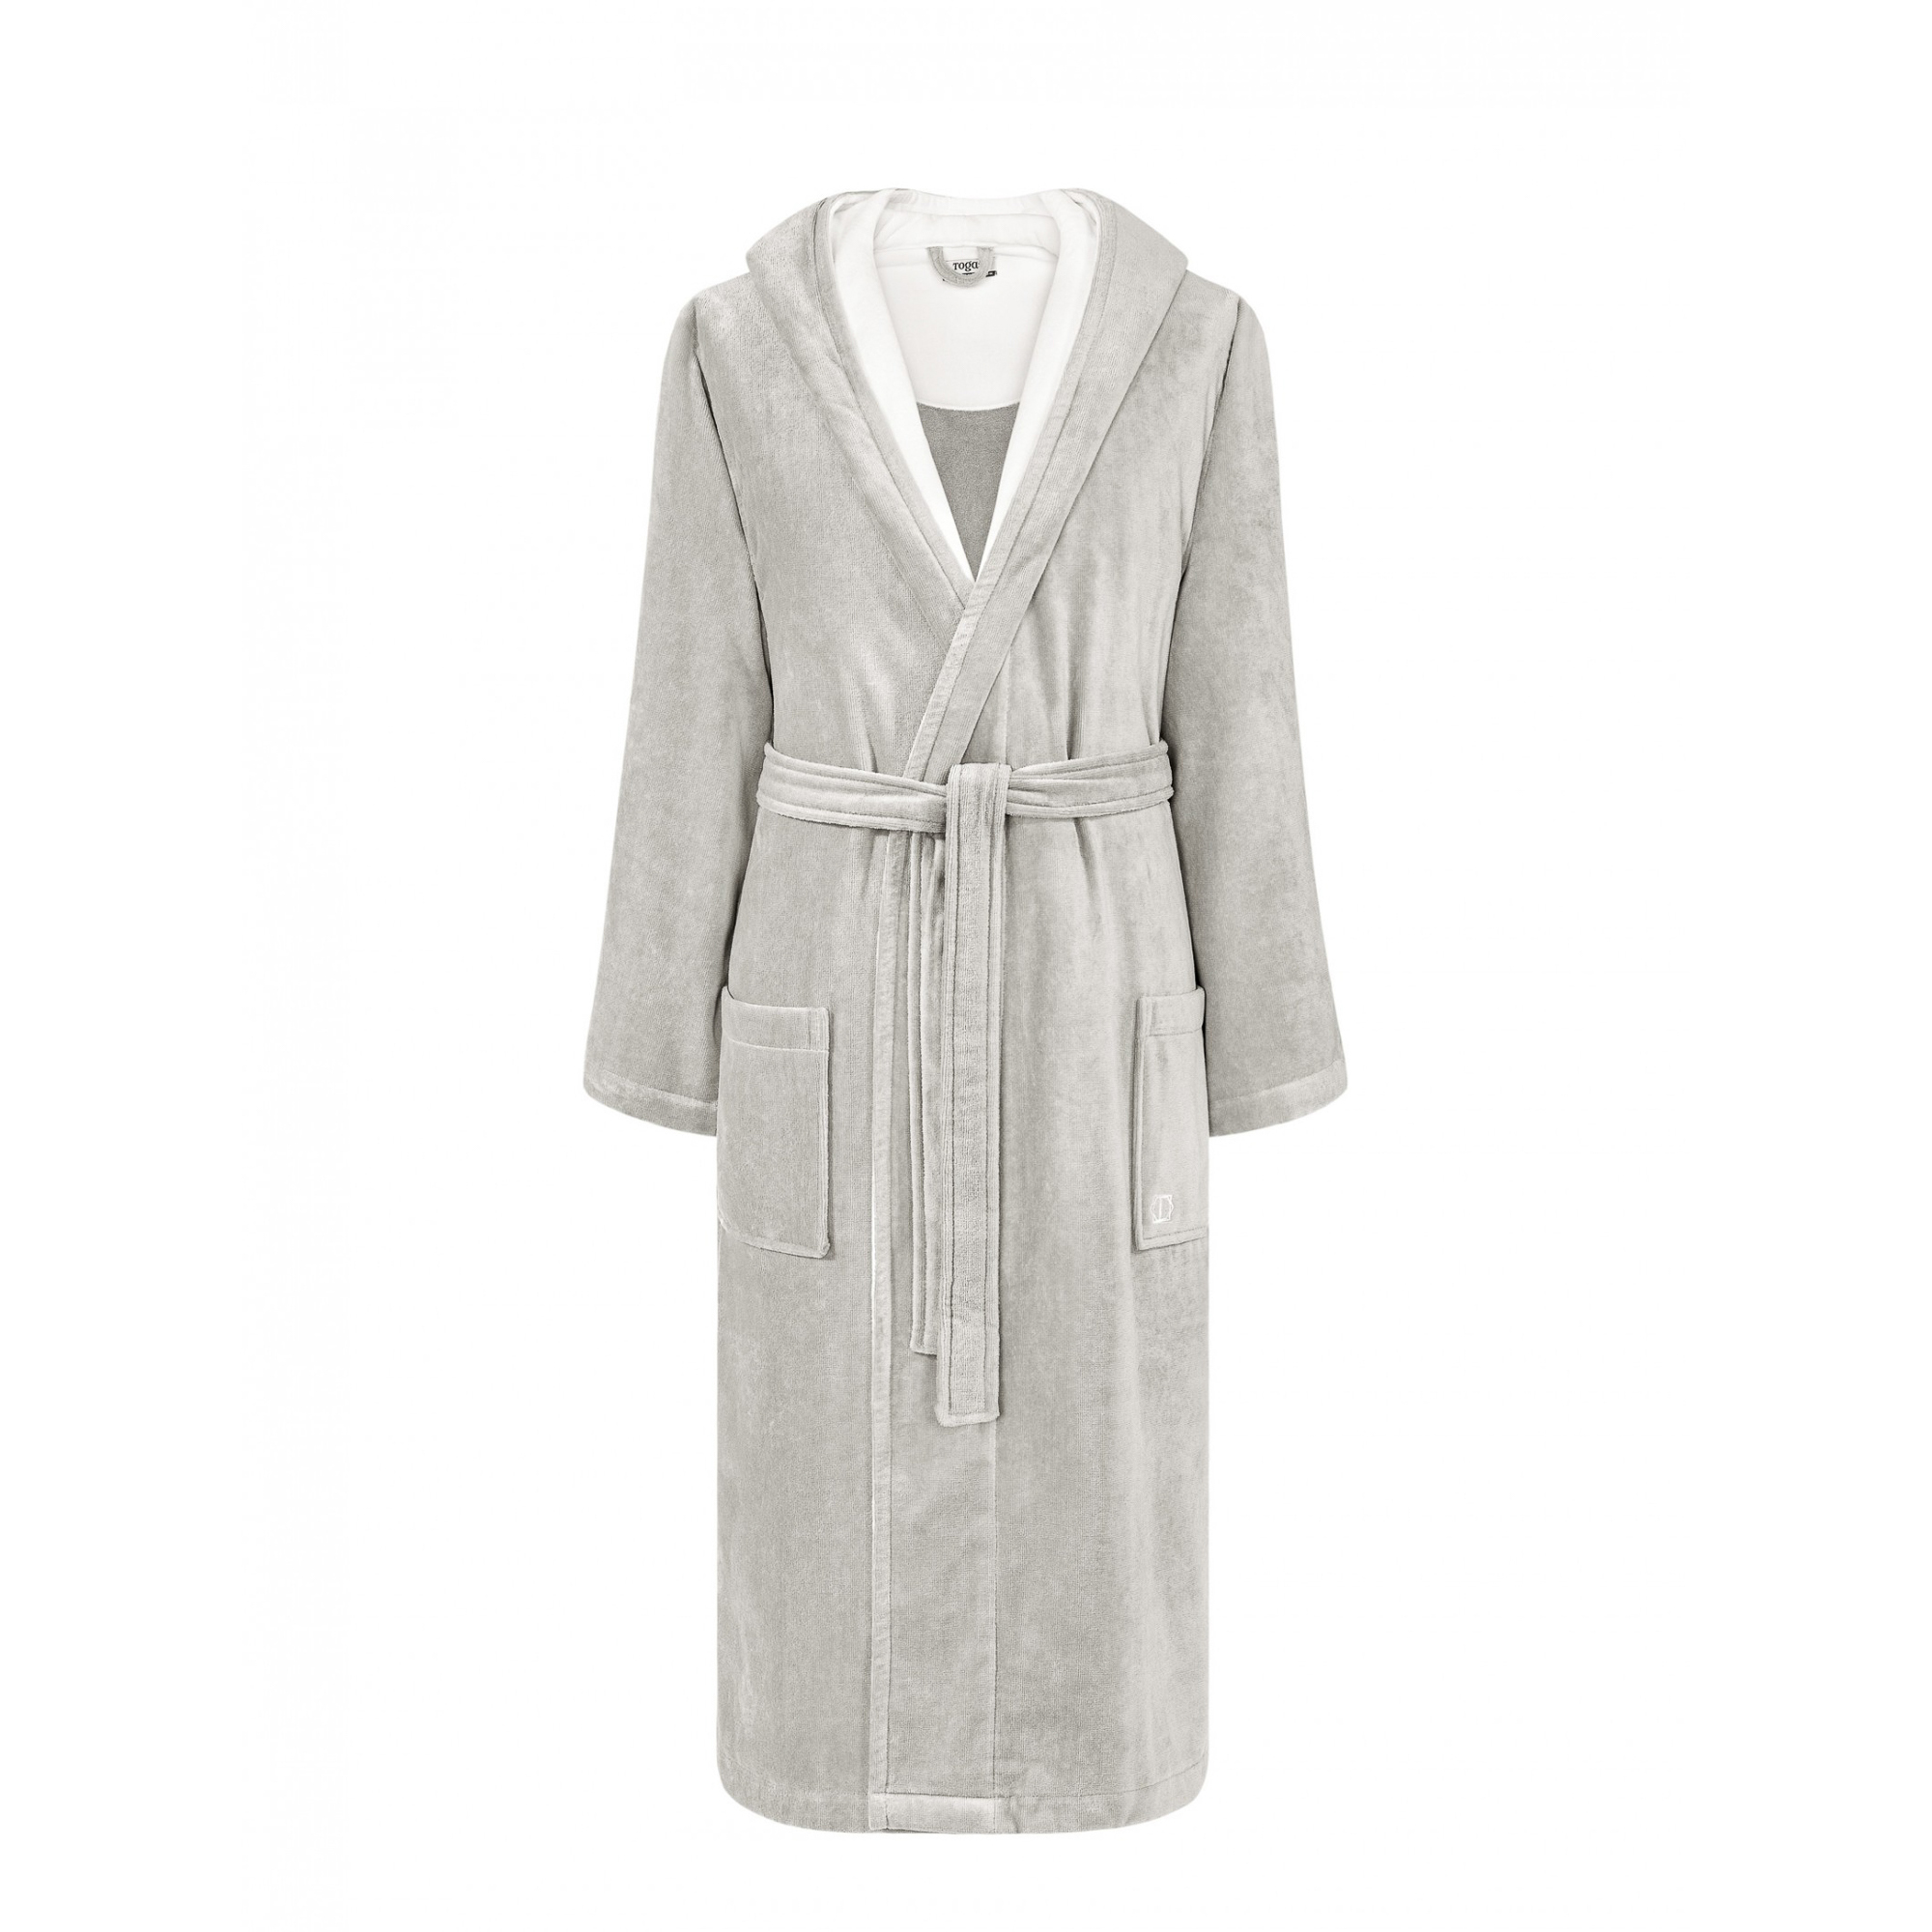 Халат Togas Арт Лайн серый с белым L(50) халат кимоно короткое togas наоми чёрное l 48